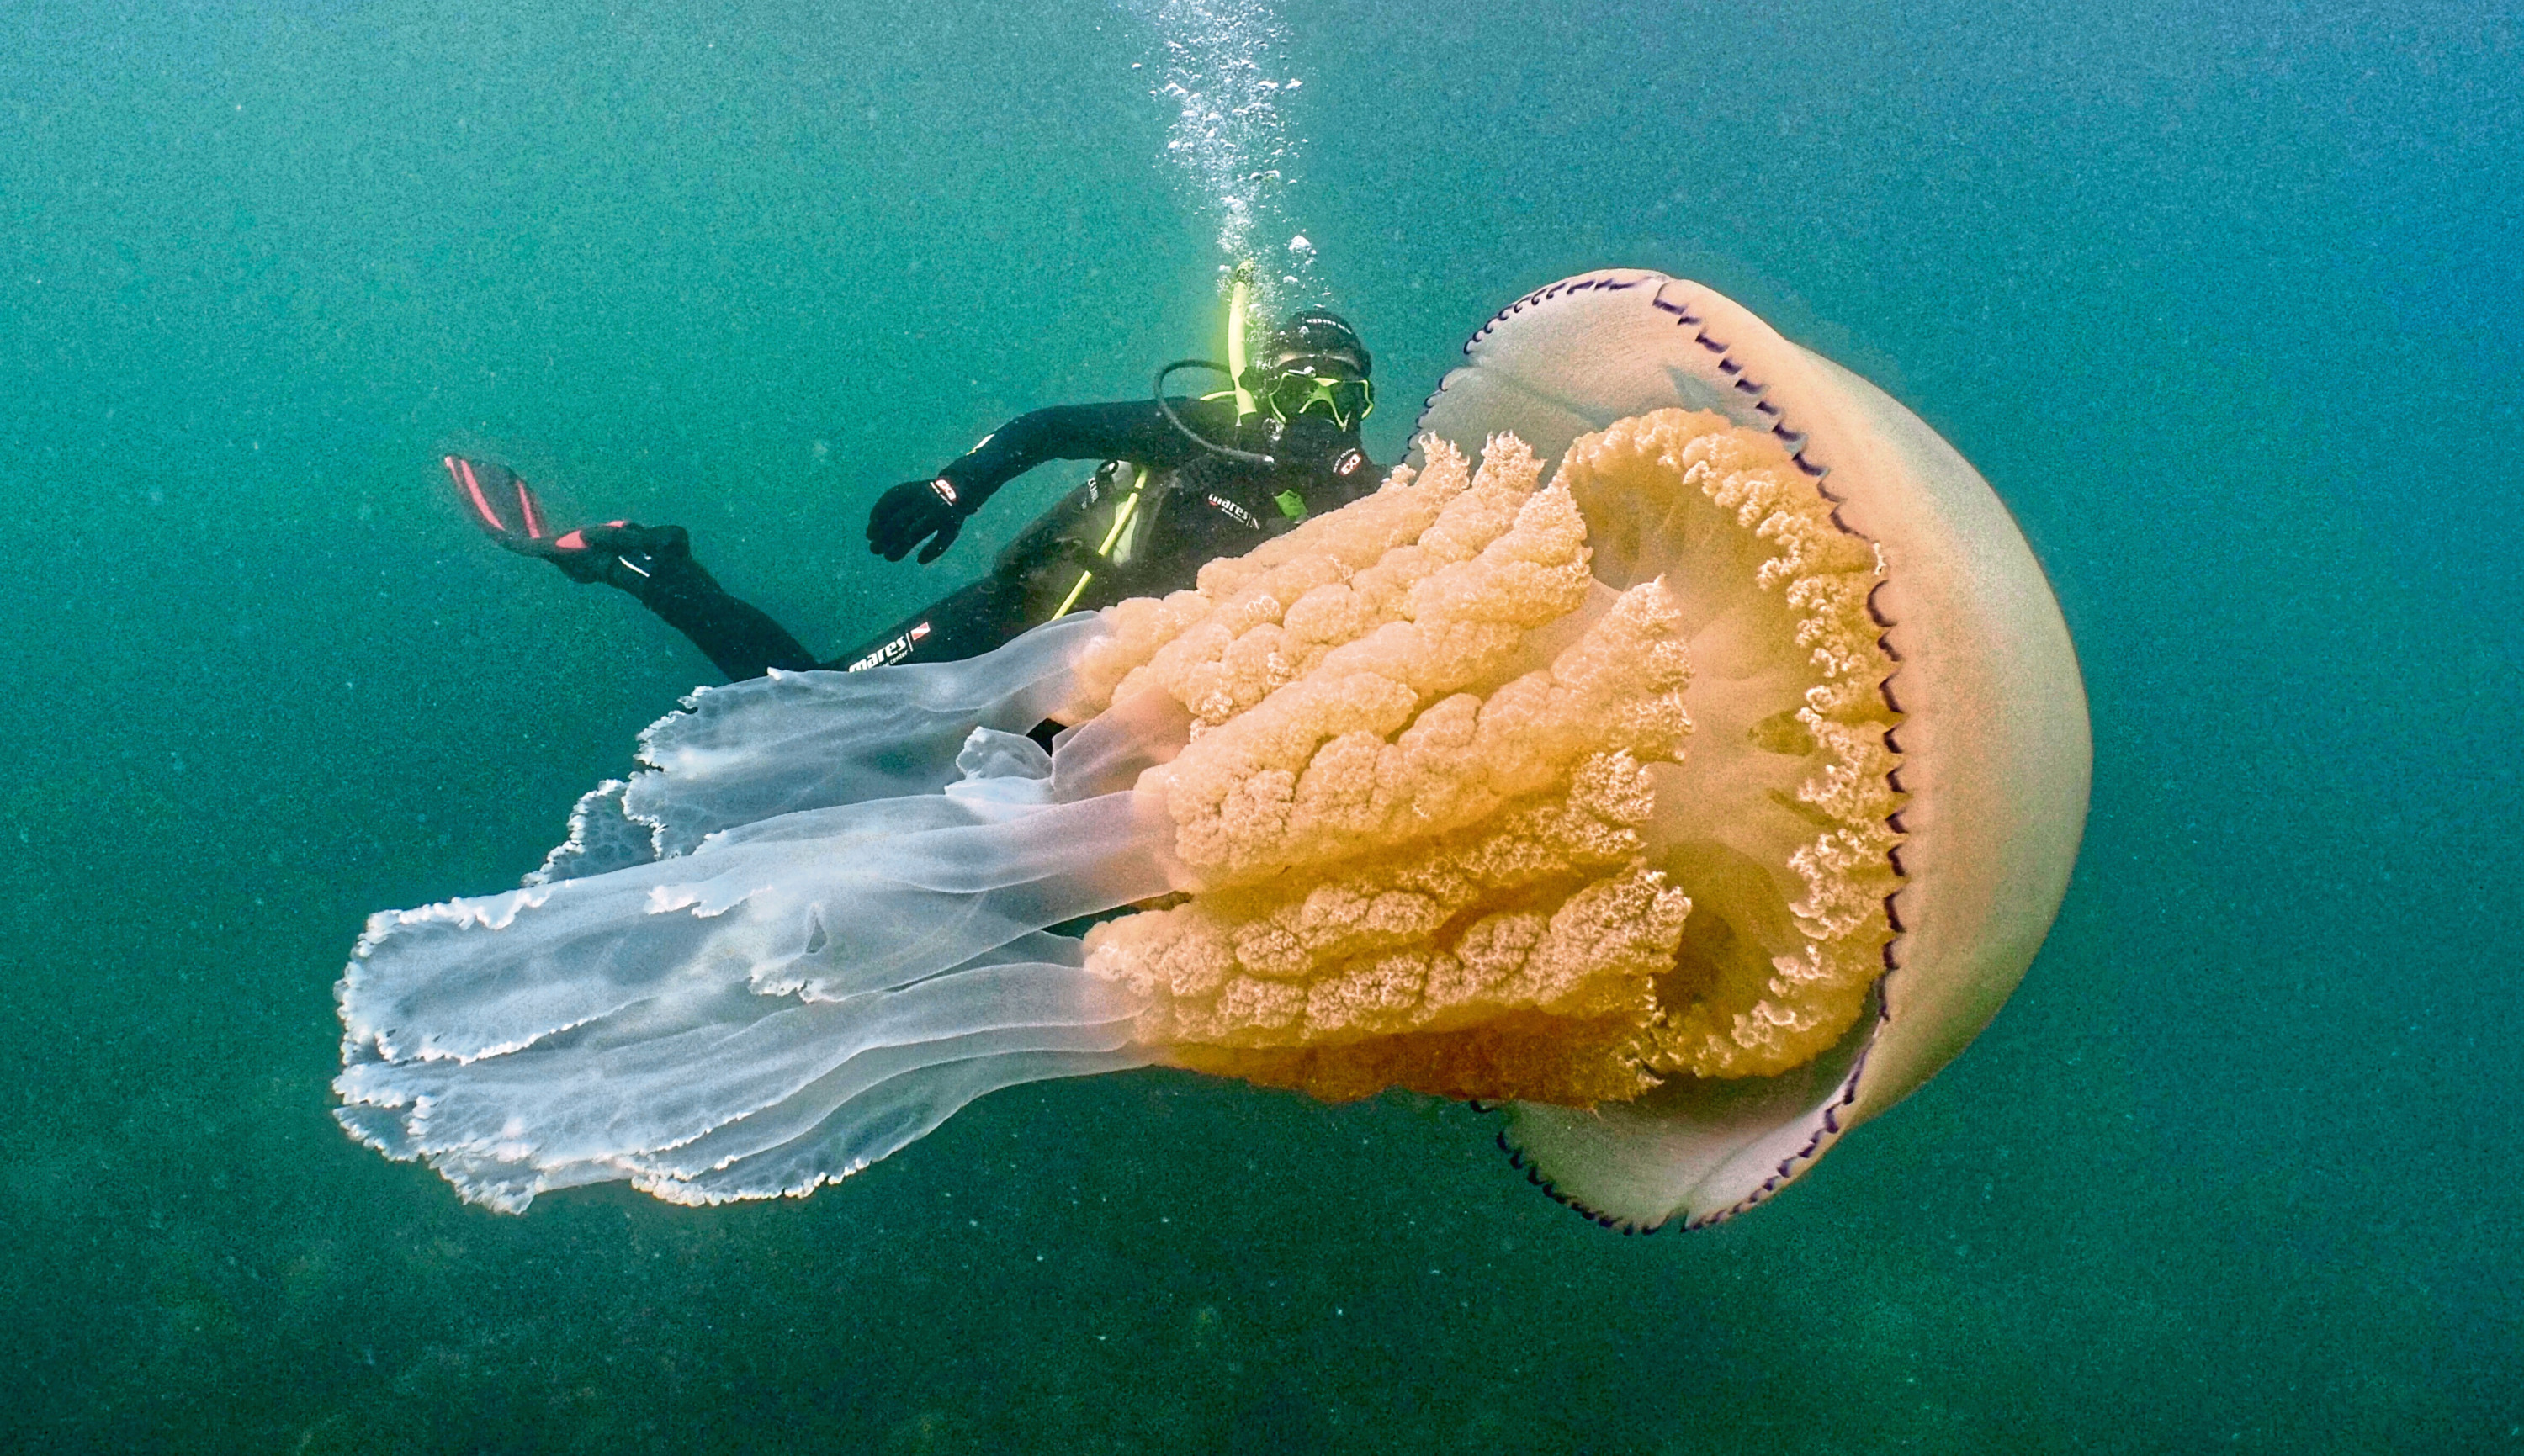 Lizzie Daly swimming alongside a massive barrel jellyfish.